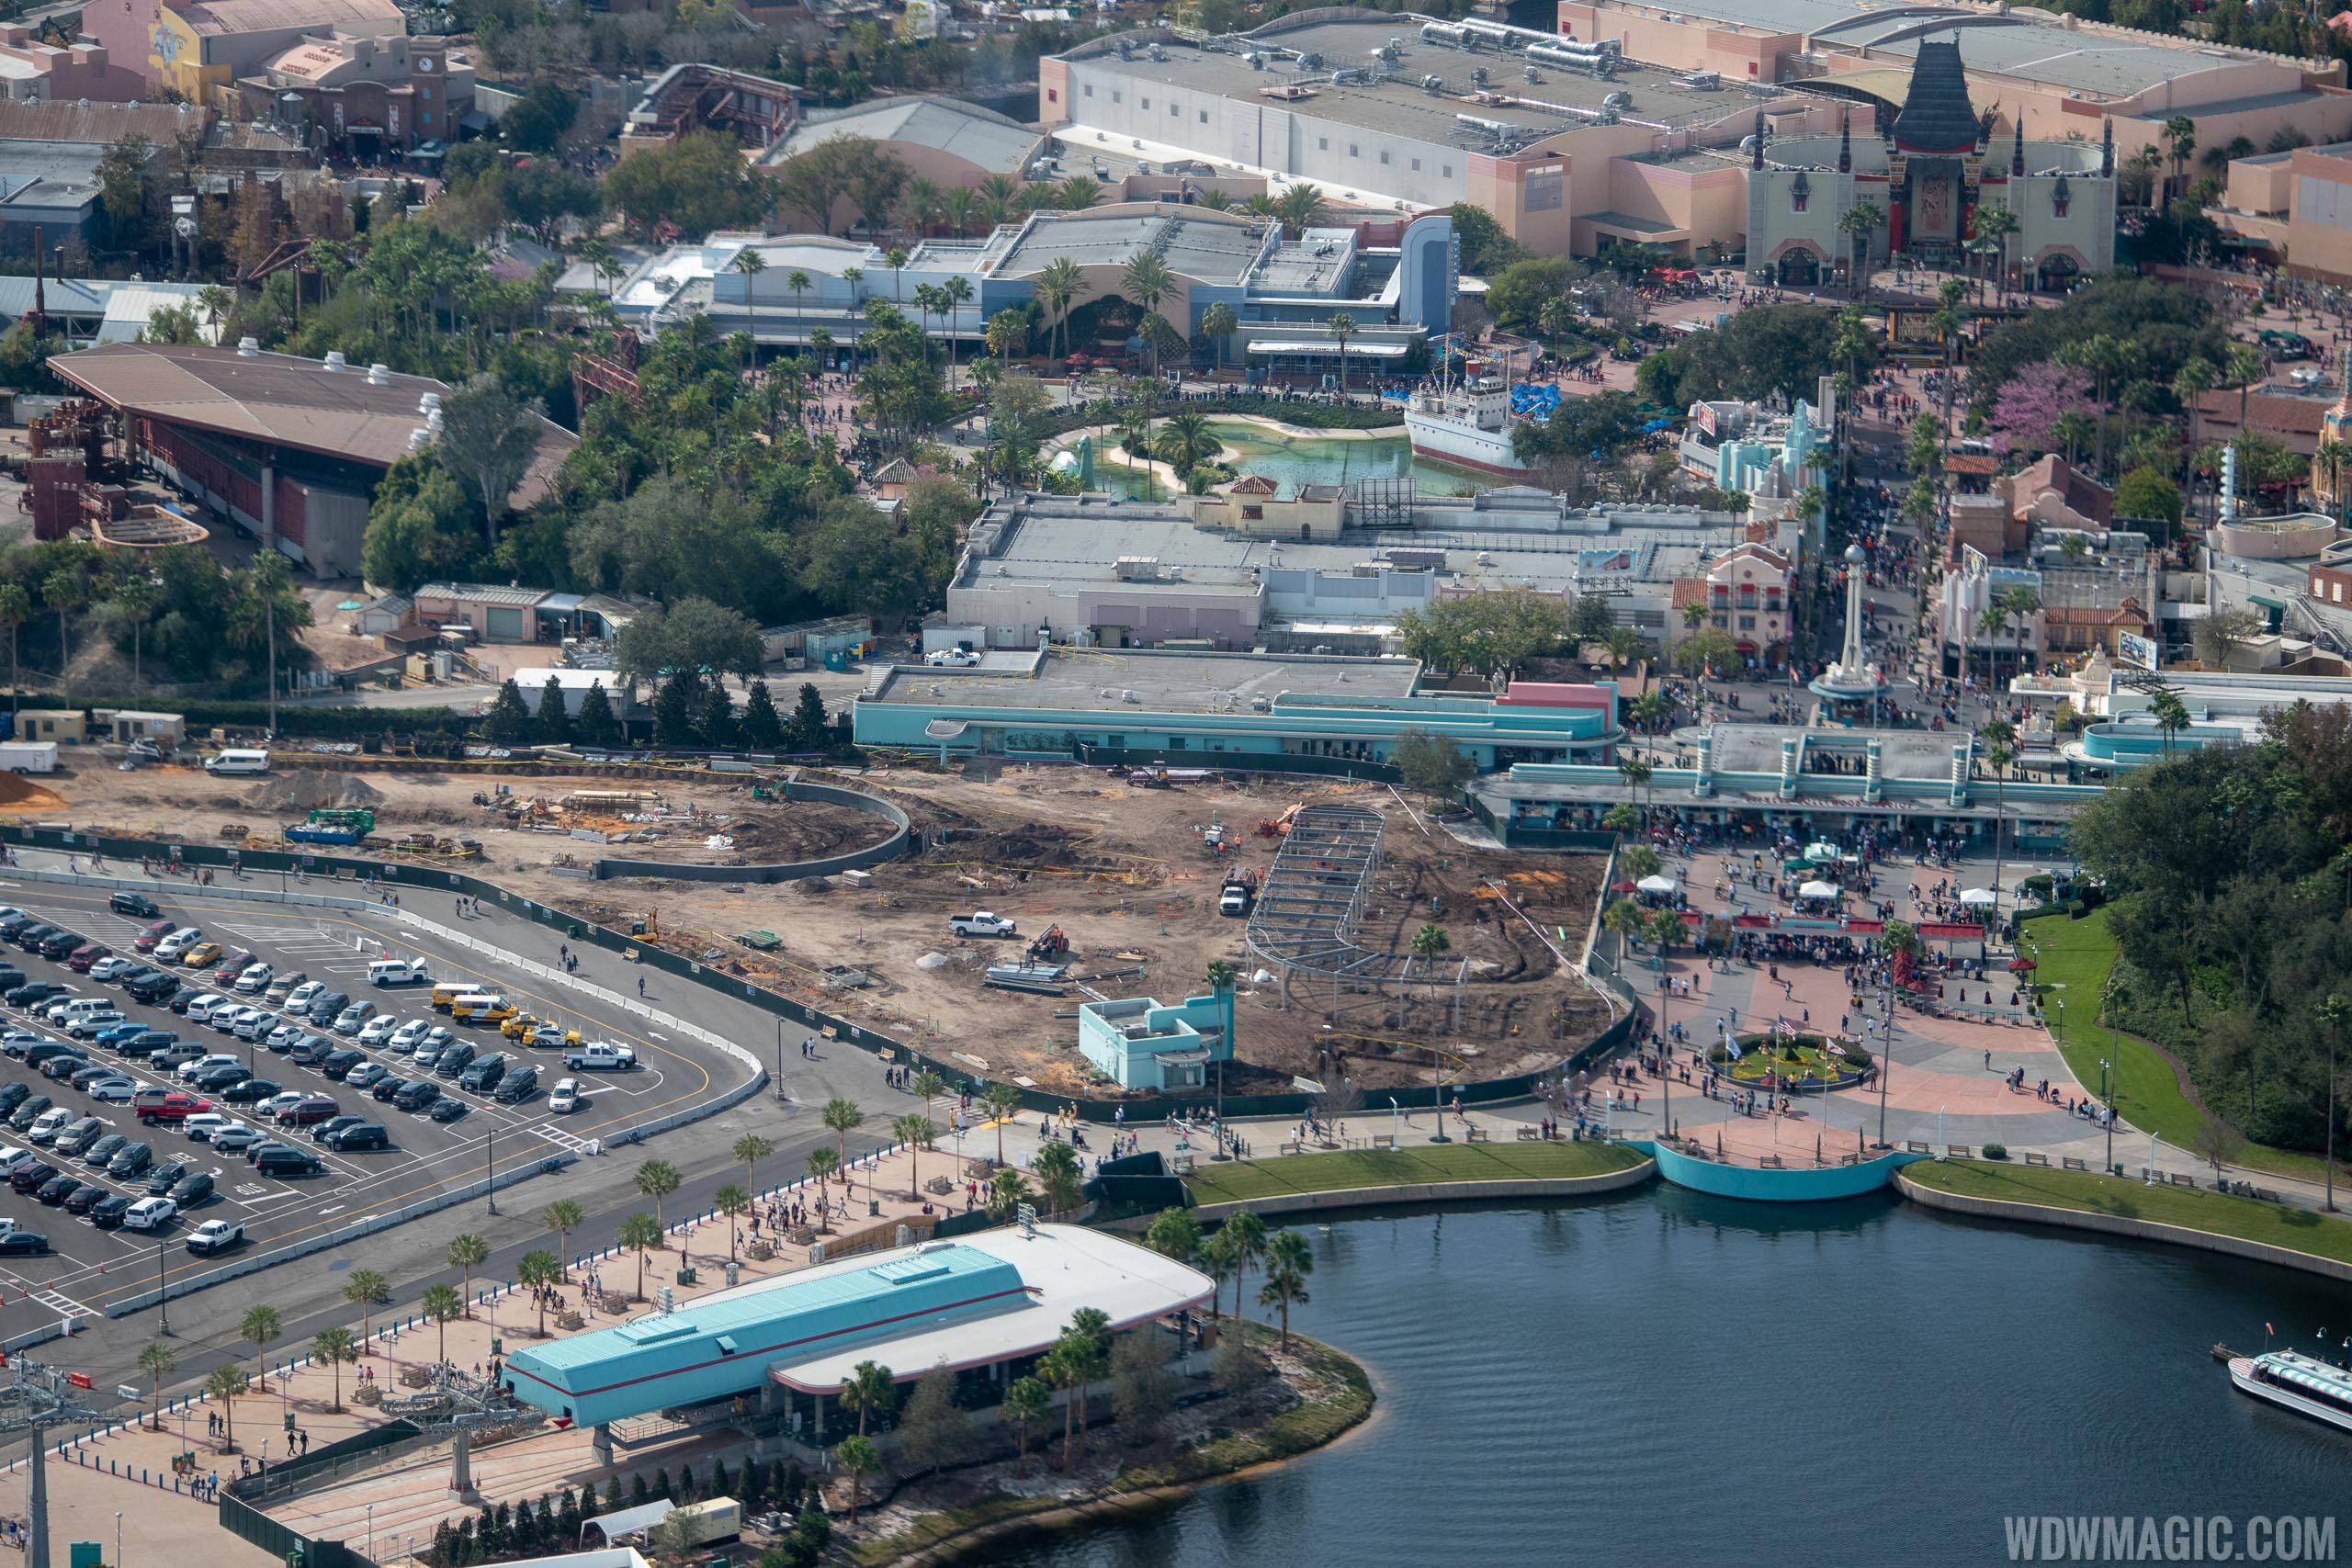 PHOTOS - Main entrance area improvements at Disney's Hollywood Studios